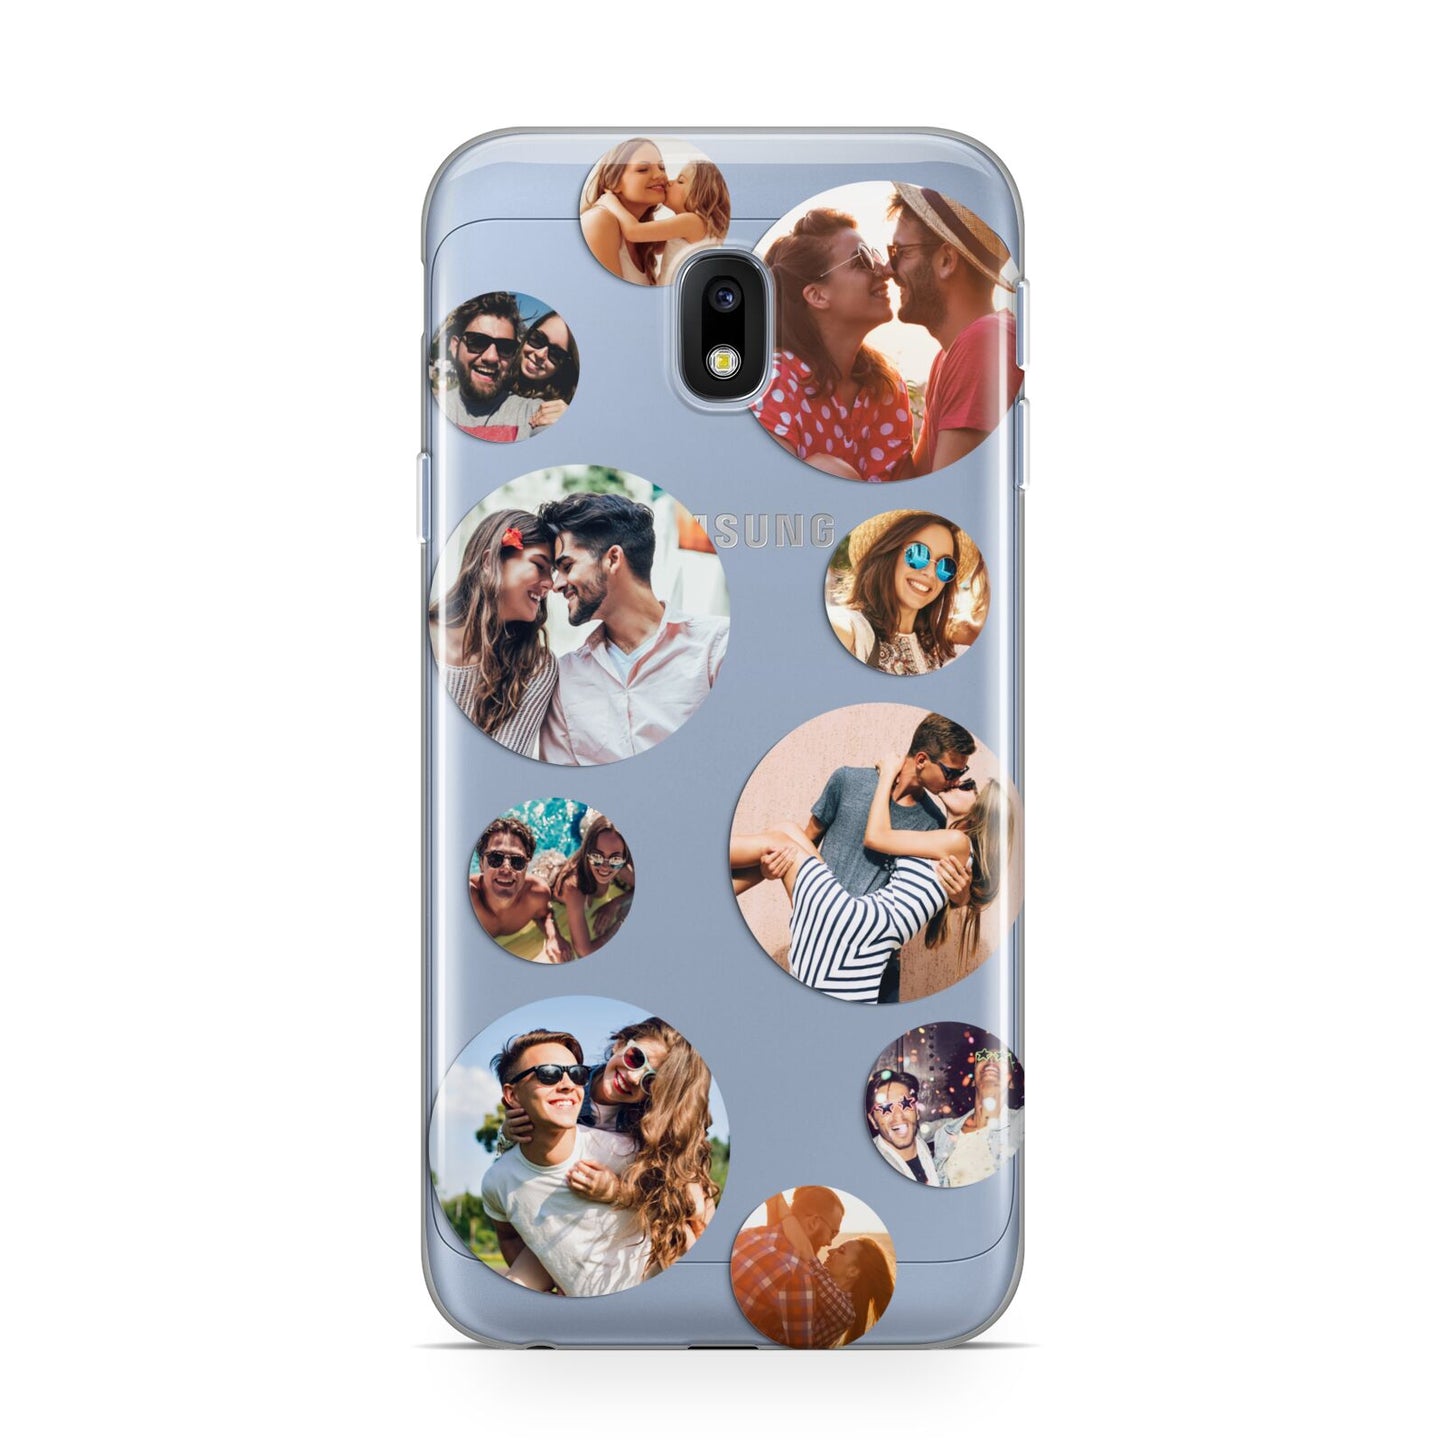 Multi Circular Photo Collage Upload Samsung Galaxy J3 2017 Case